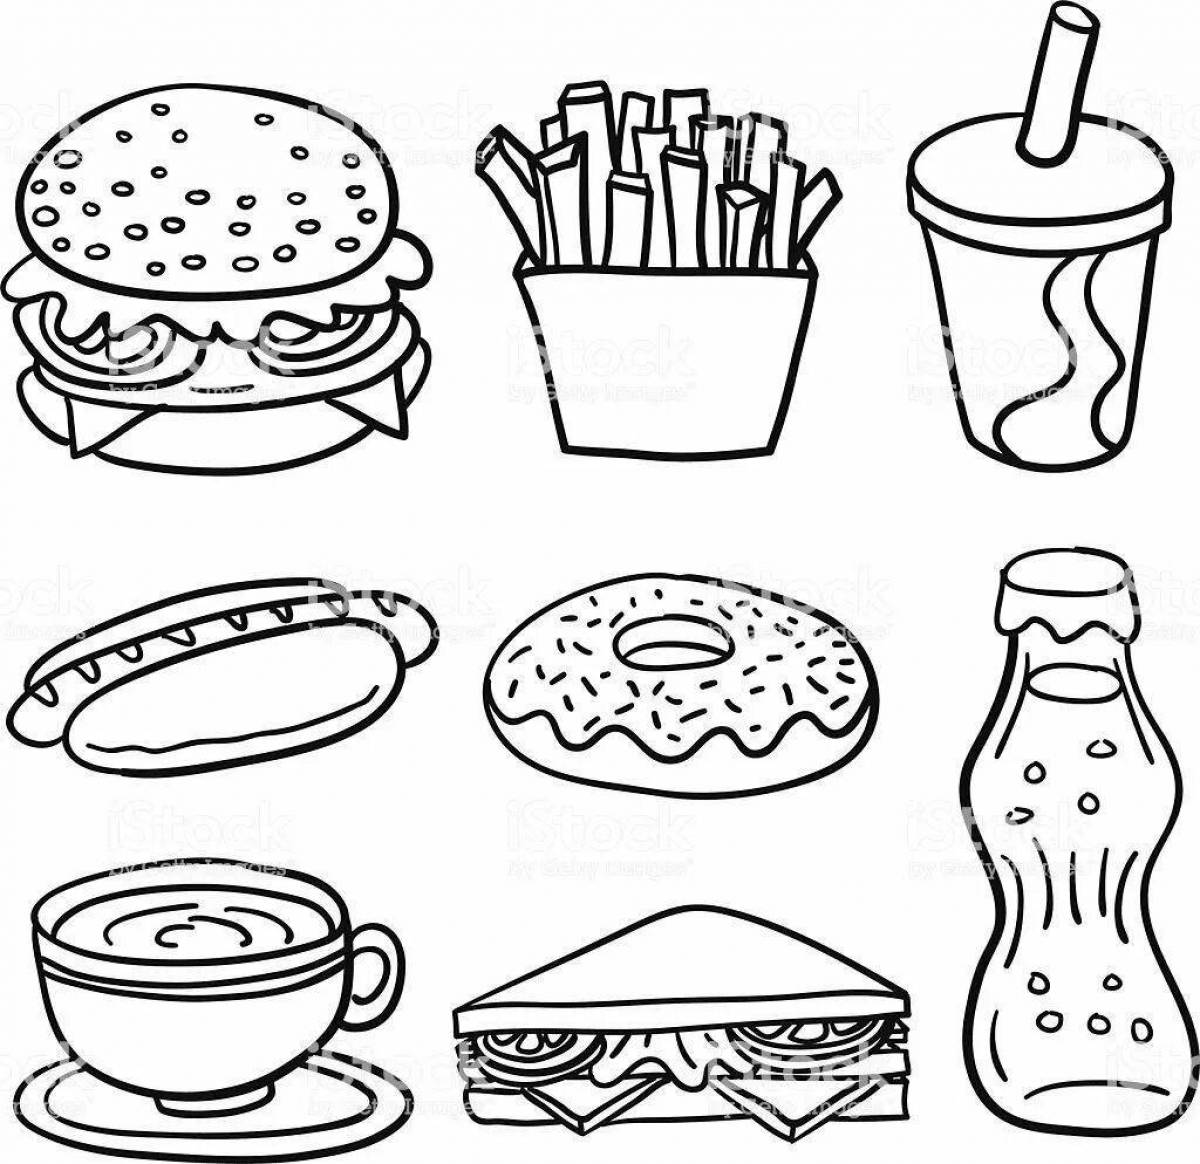 Mcdonald's food inspirational coloring page